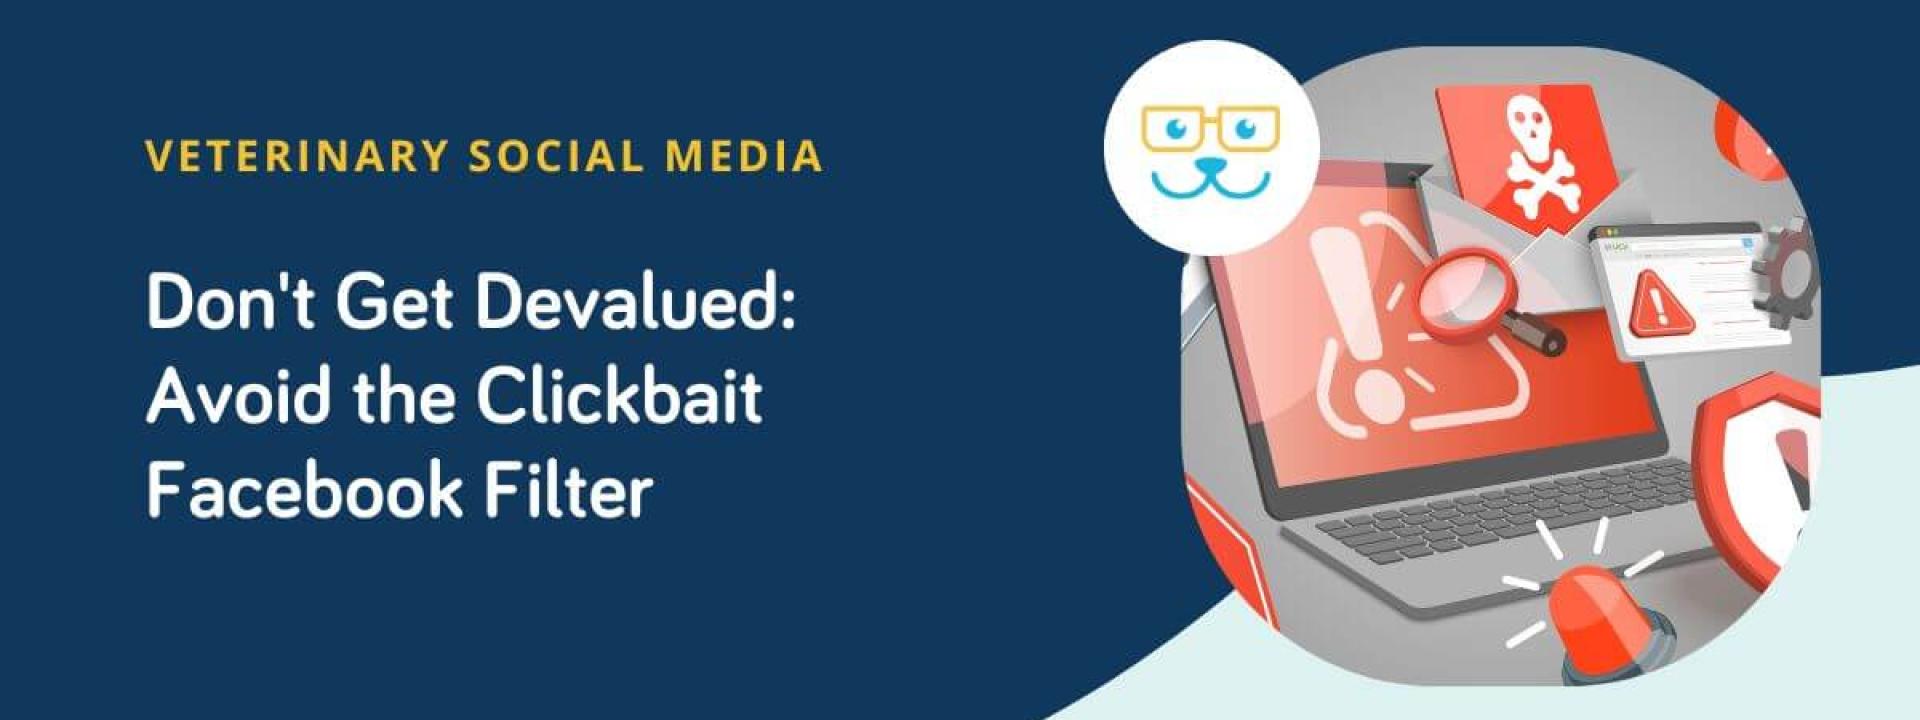 Don’t Get Devalued: Avoid the Clickbait Facebook Filter